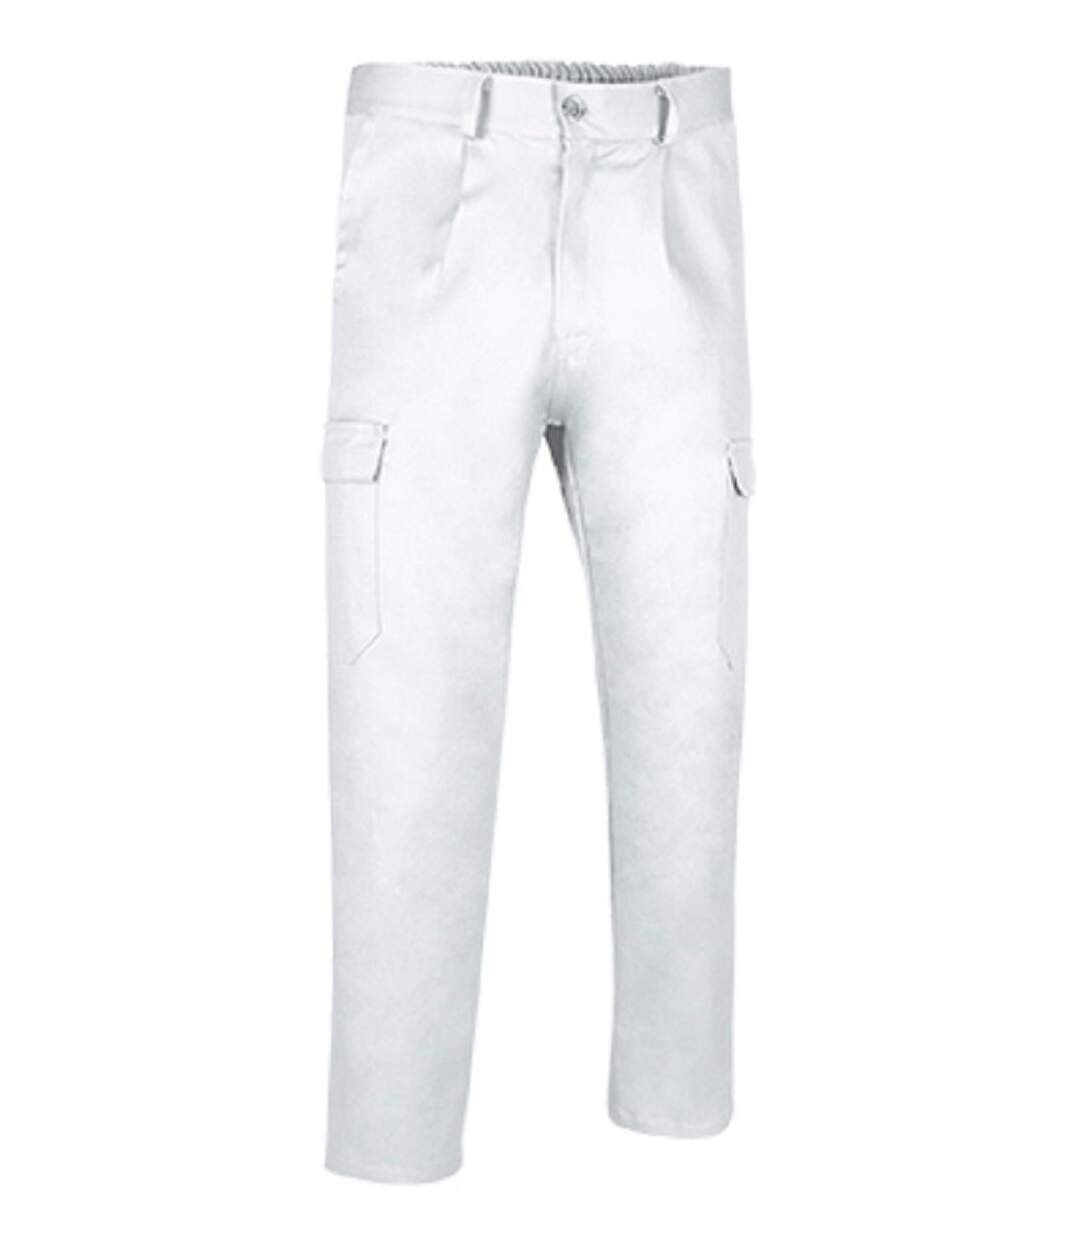 Pantalon de travail - Homme - WINTERFELL- Homme - blanc